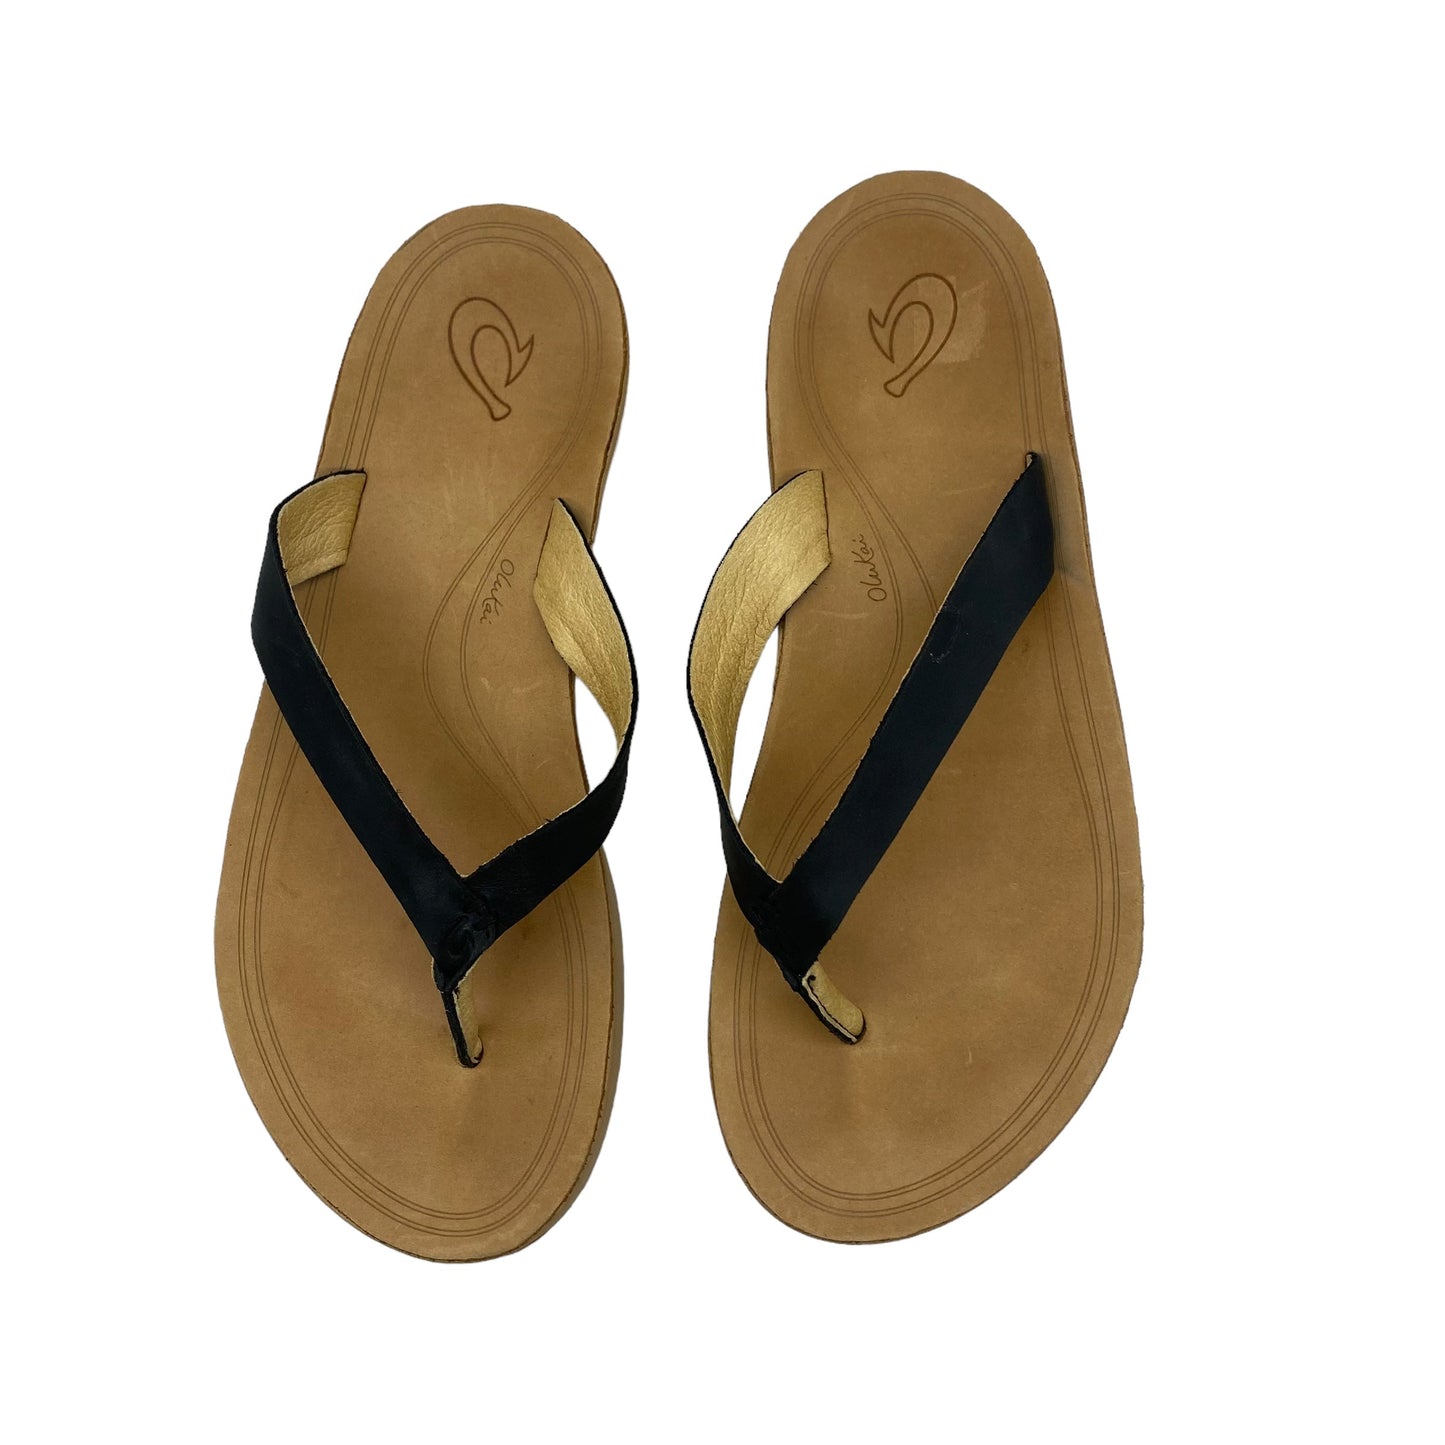 Sandals Flip Flops By Olukai  Size: 8